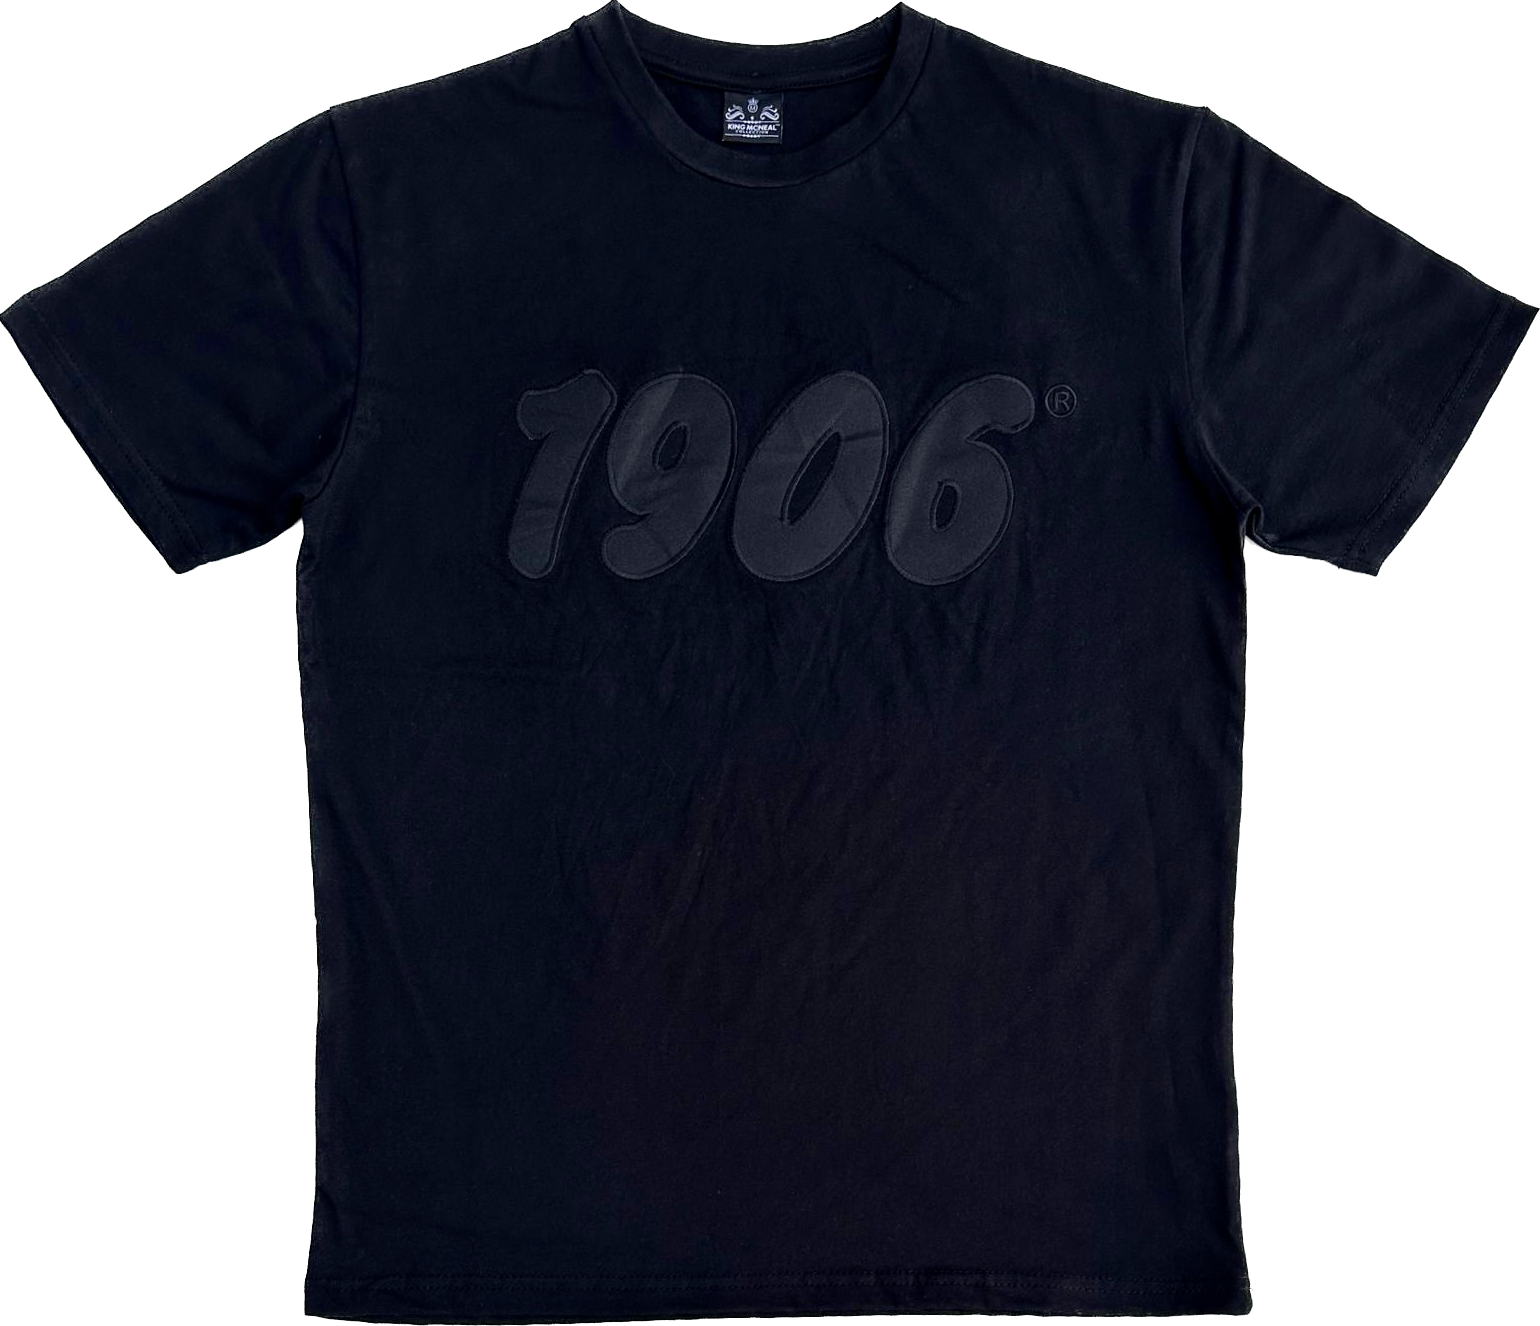 Alpha 1906 Black On Black Premium Shirt